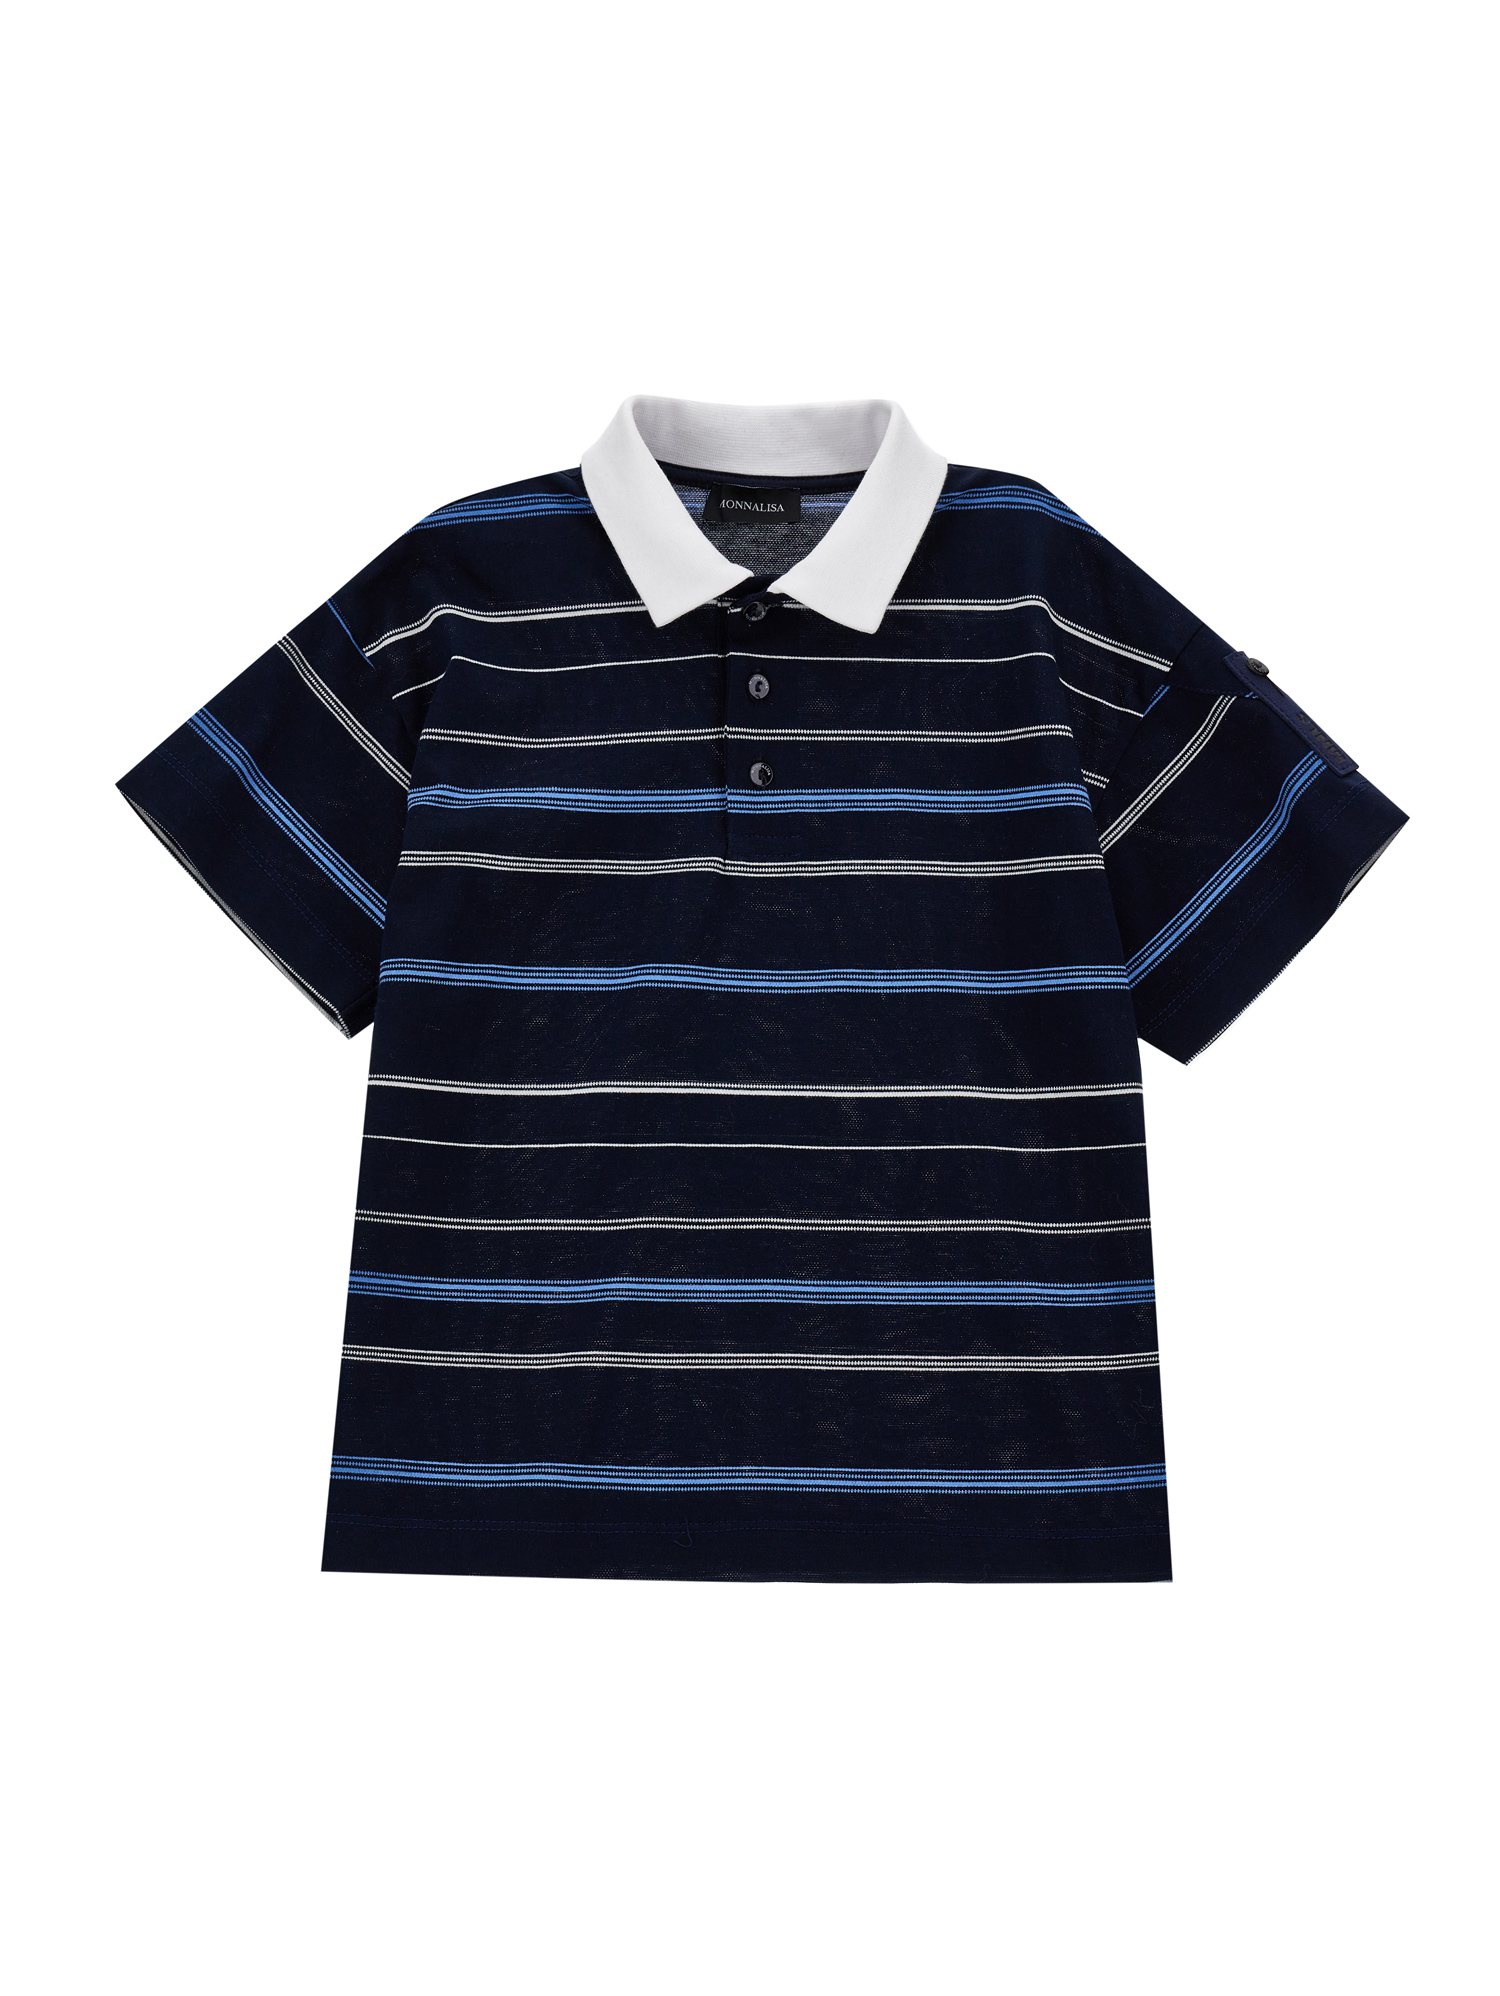 Monnalisa Striped Cotton Polo Shirt In Navy Blue